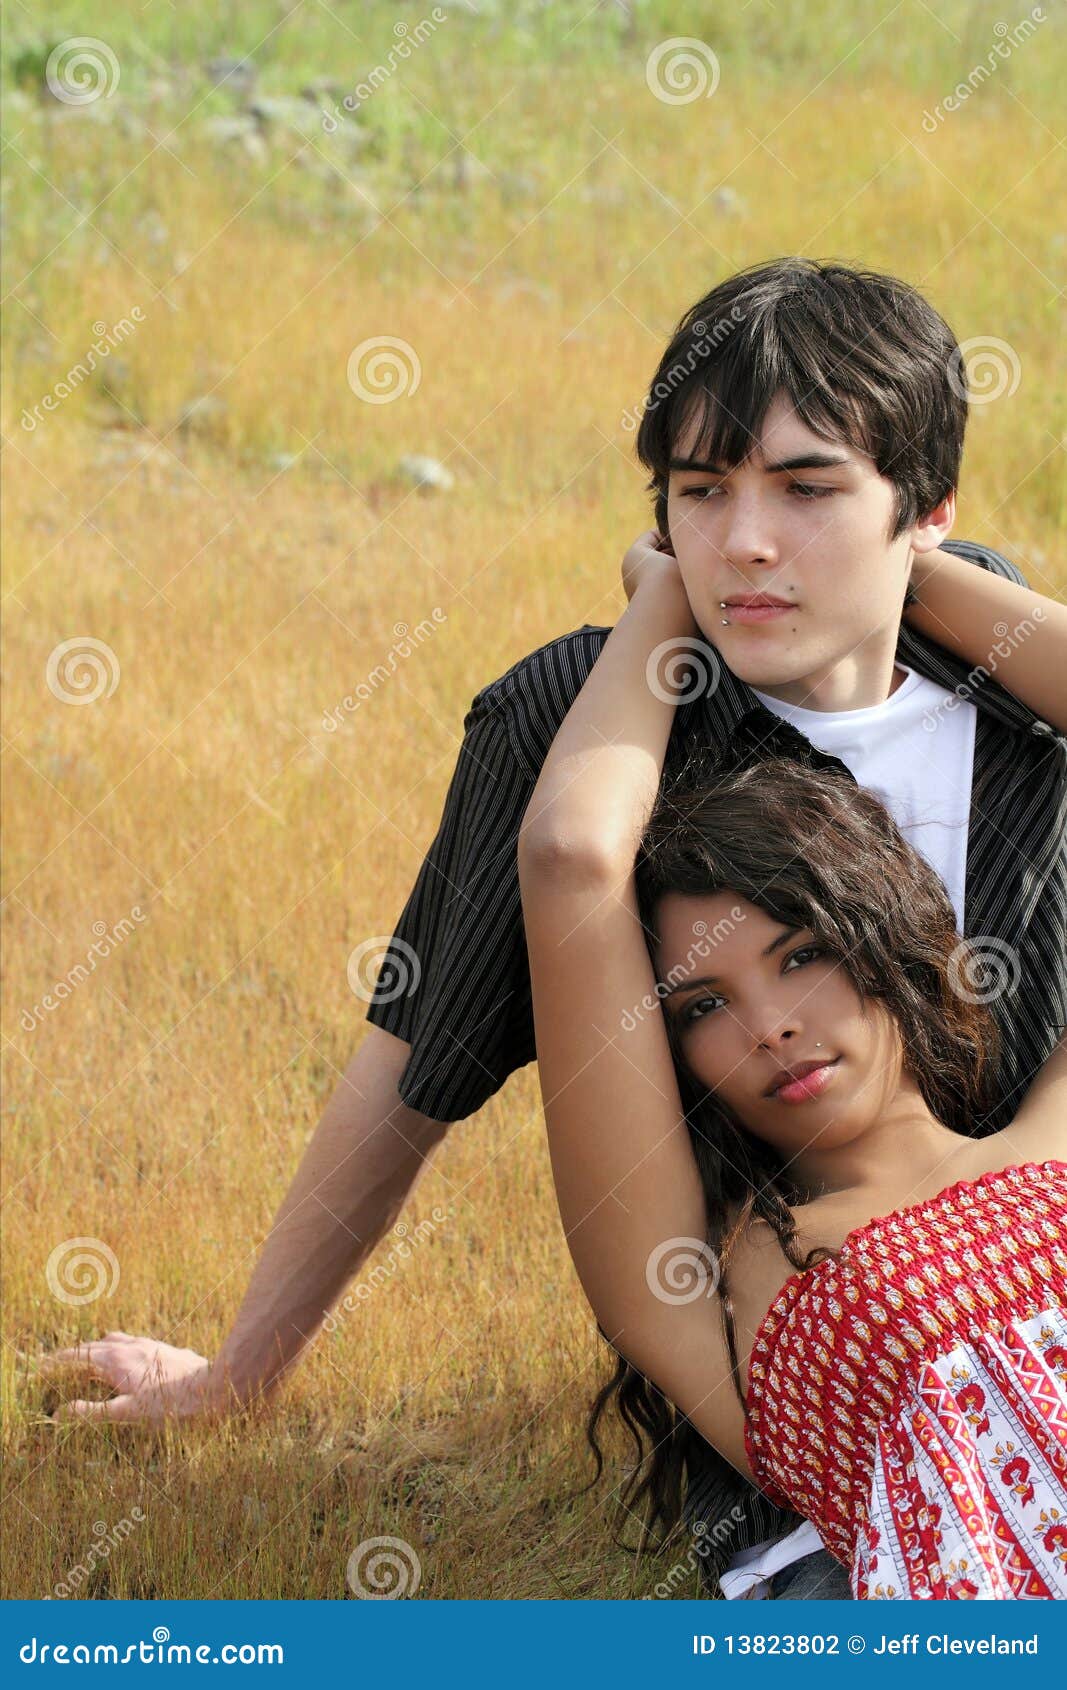 Young teen boy and girl couple